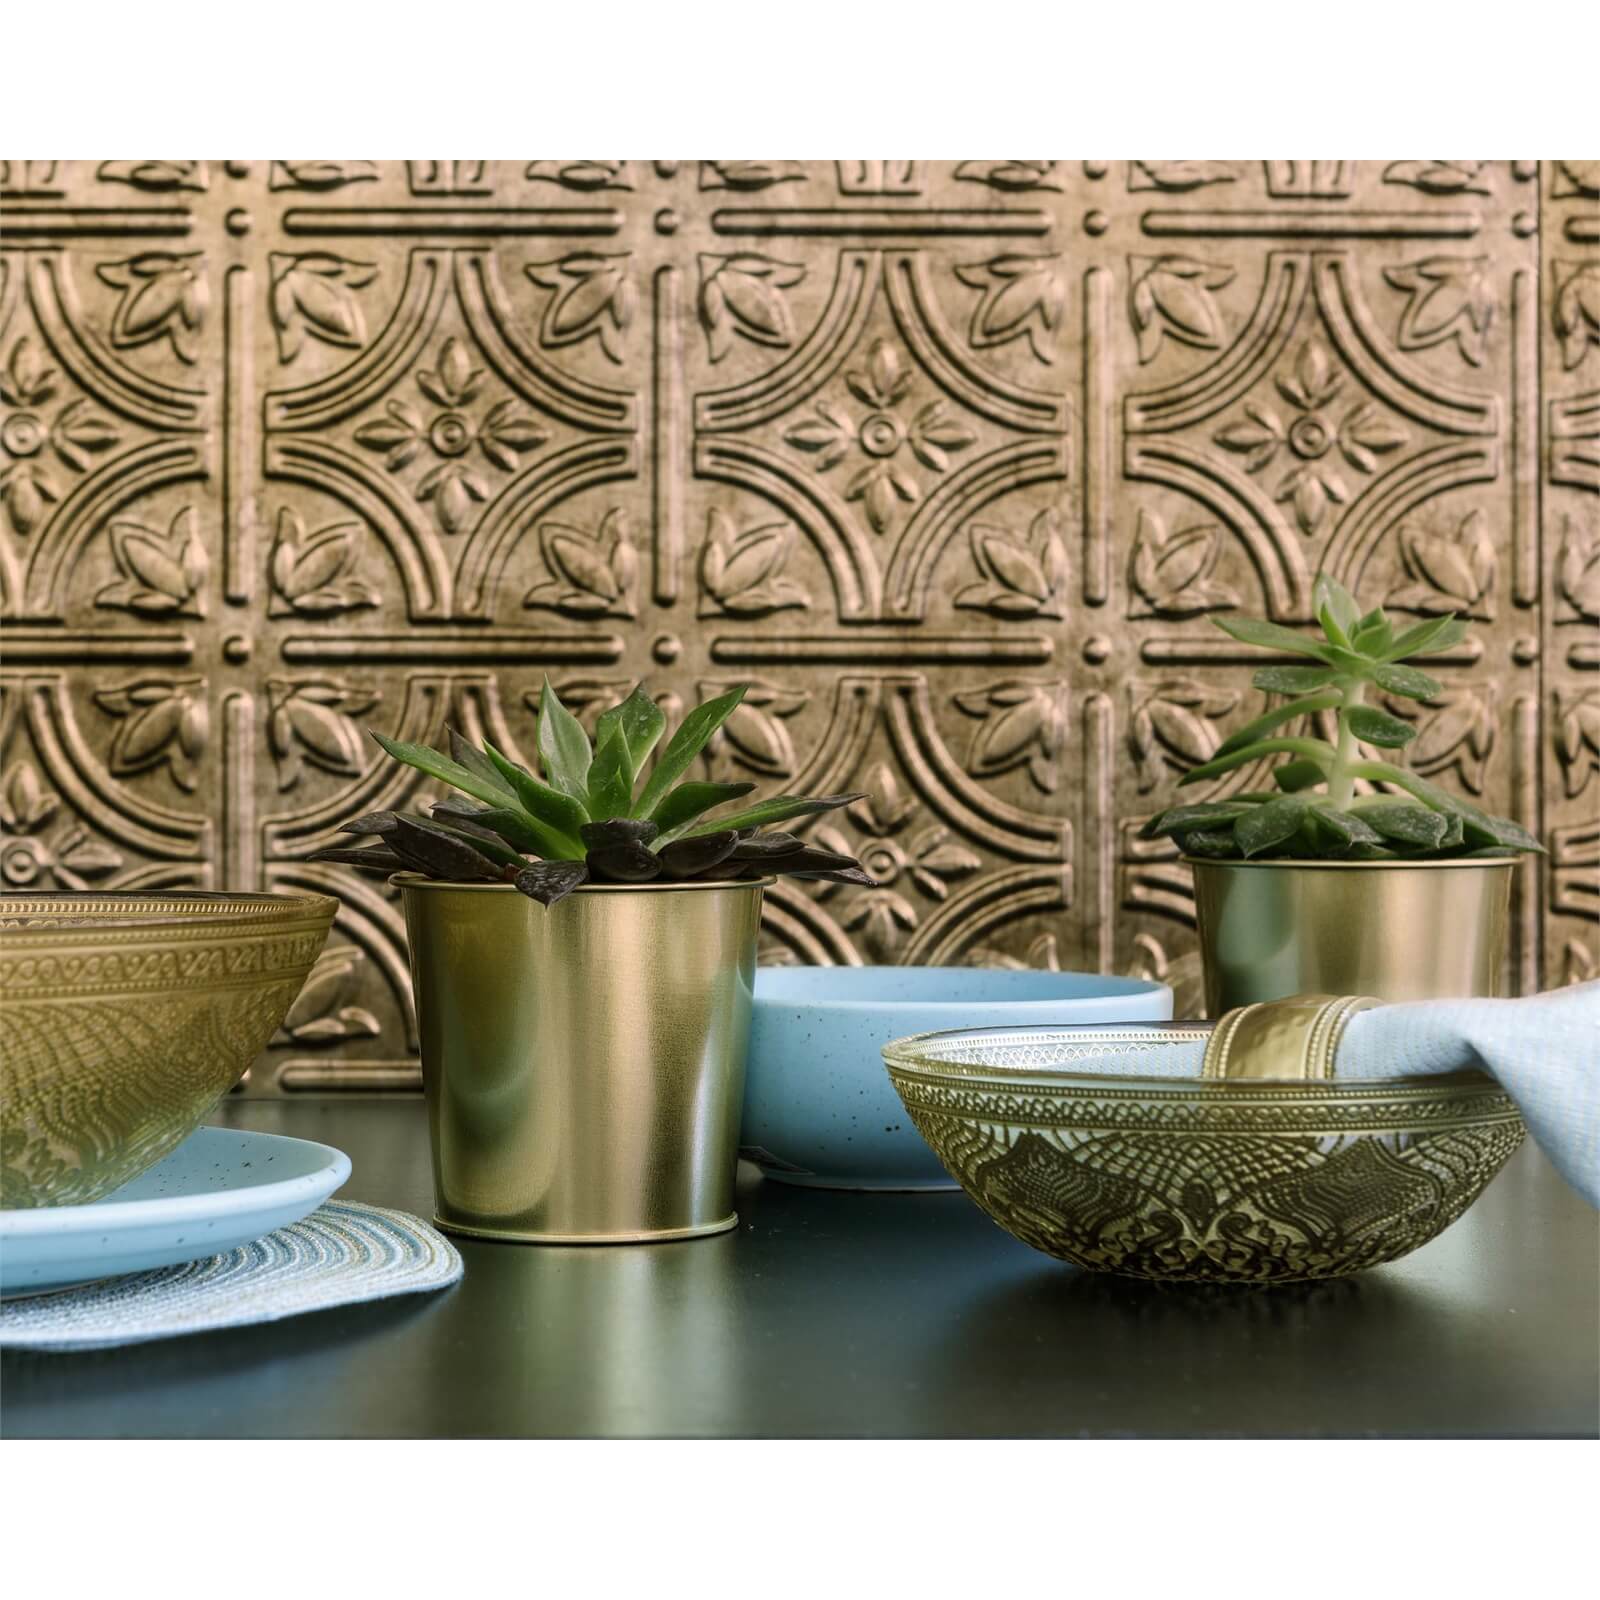 Photo of Innovera Decor 3d Design Wall Tile - Kitchen Splashback Cladding Panels - Empire - Bermuda Bronze- Set Of 6-